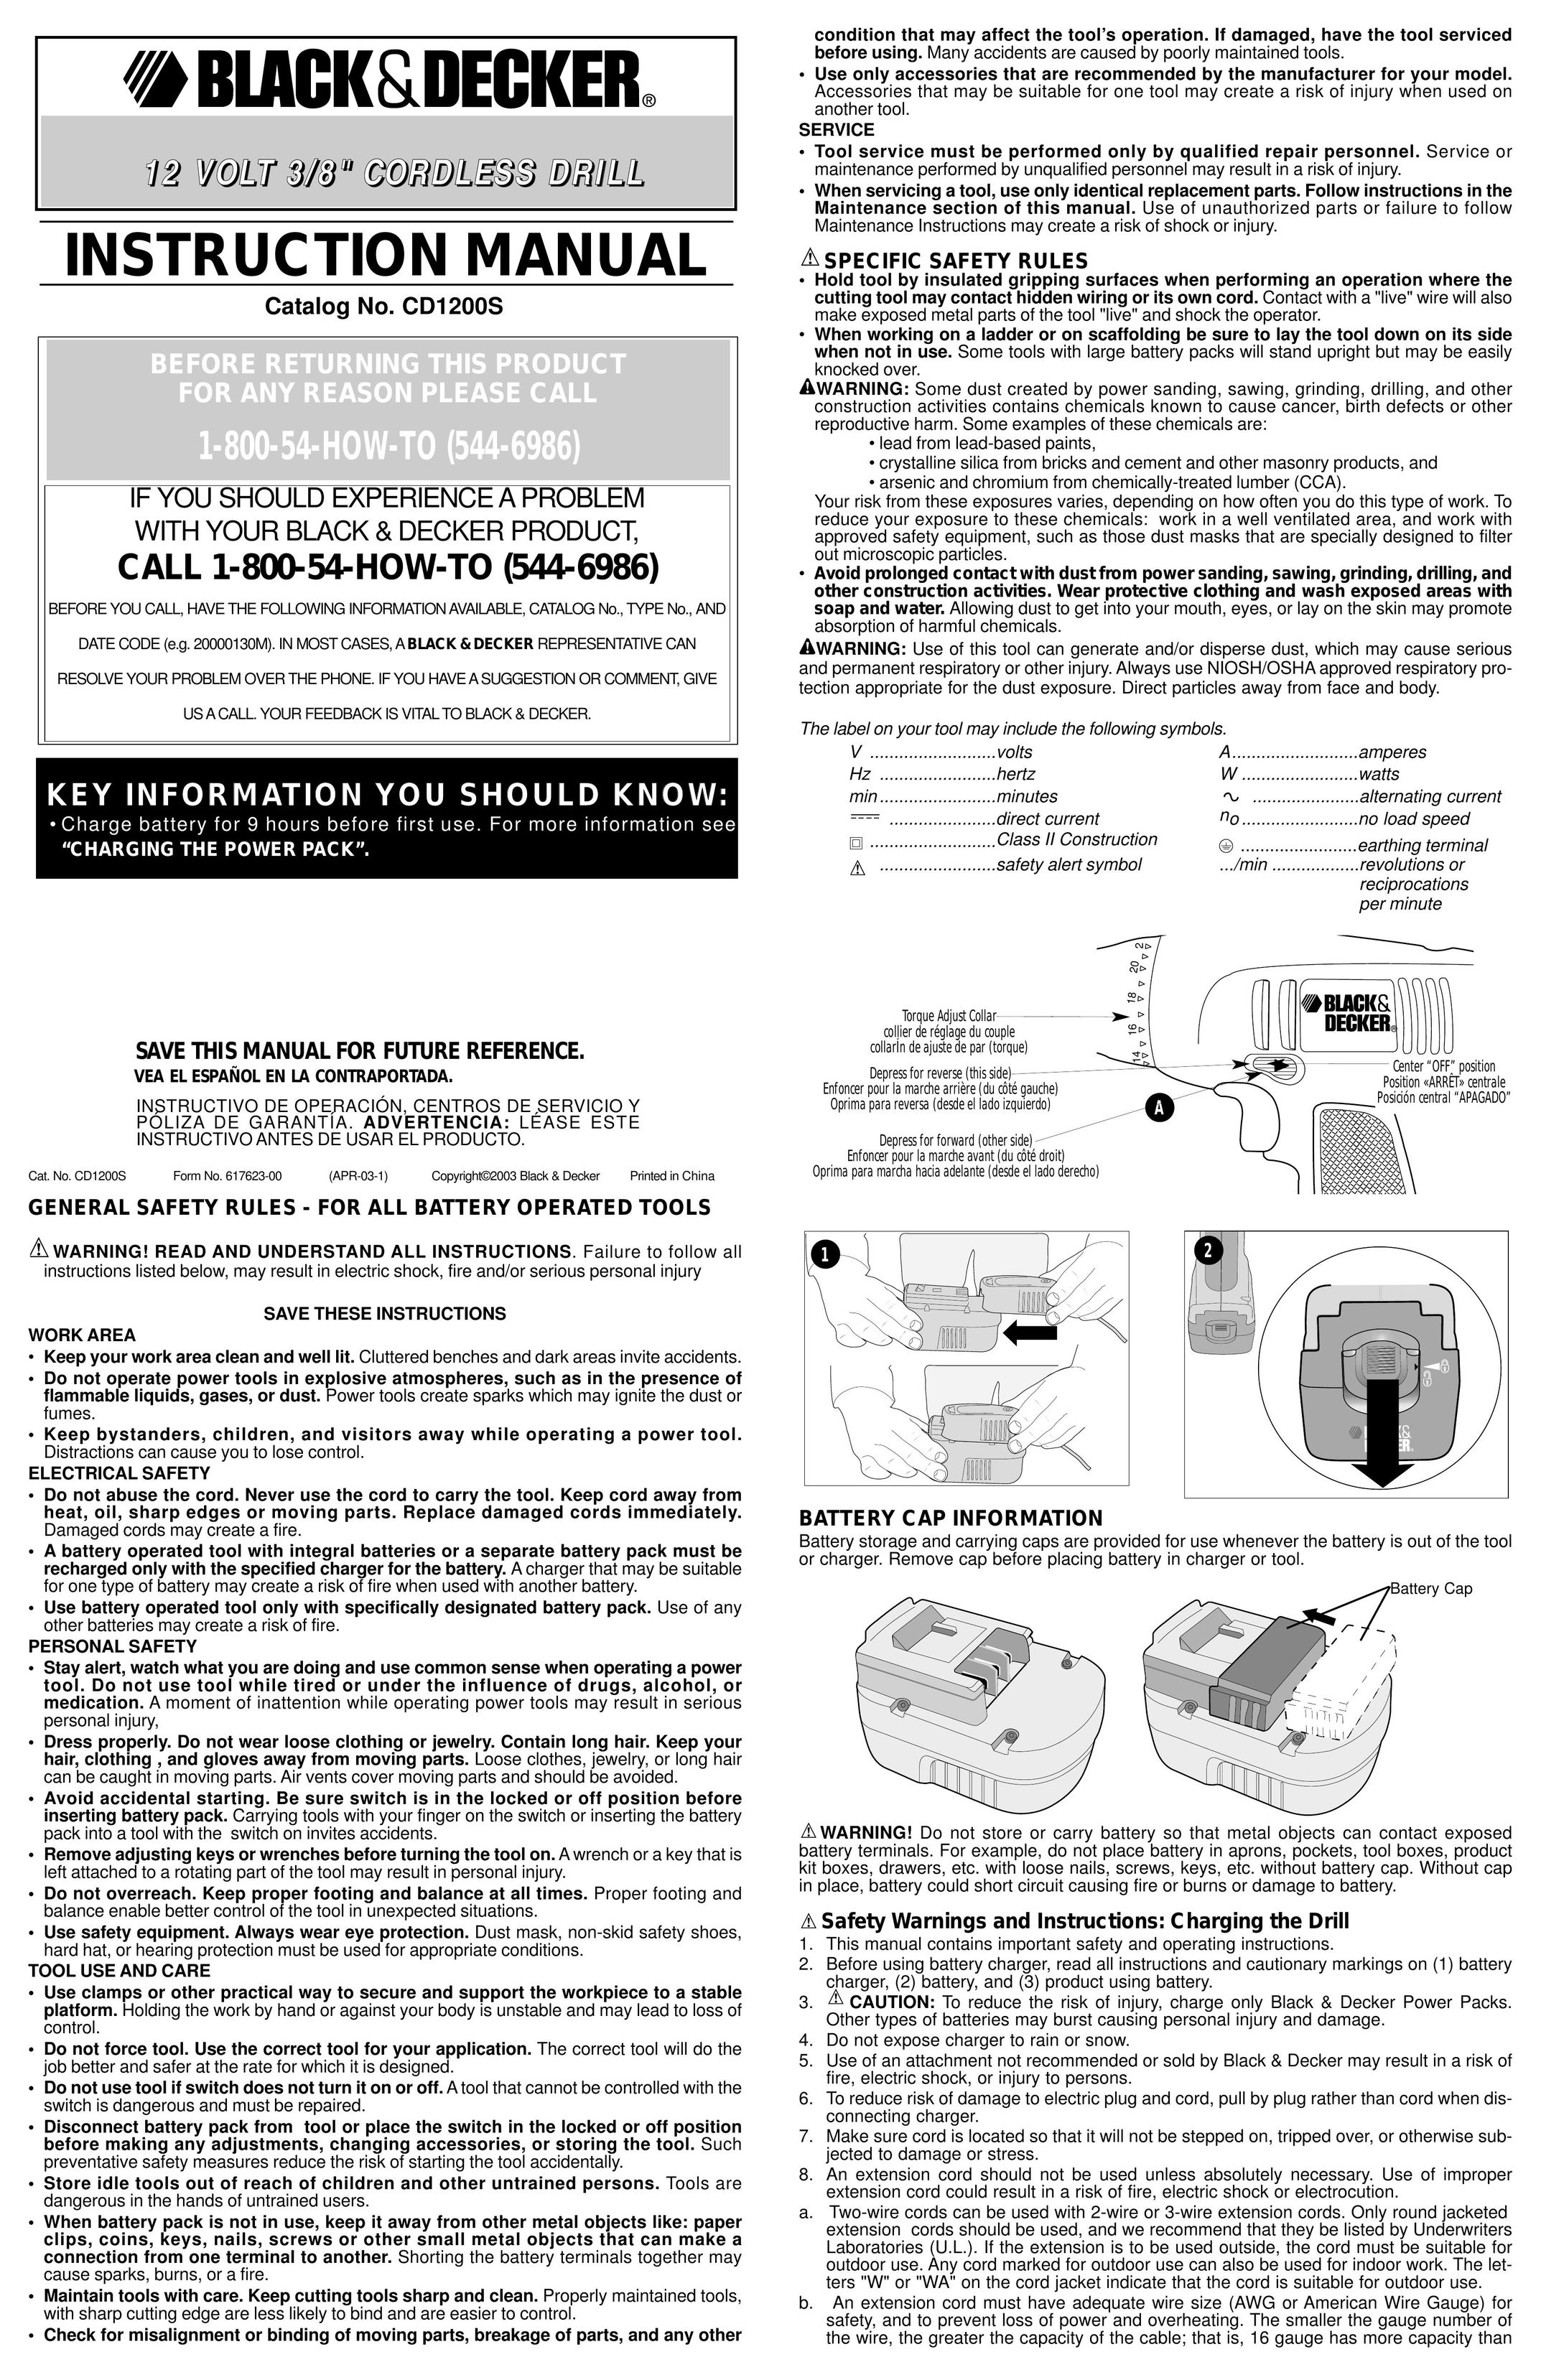 Black & Decker 617623-00 Cordless Drill User Manual